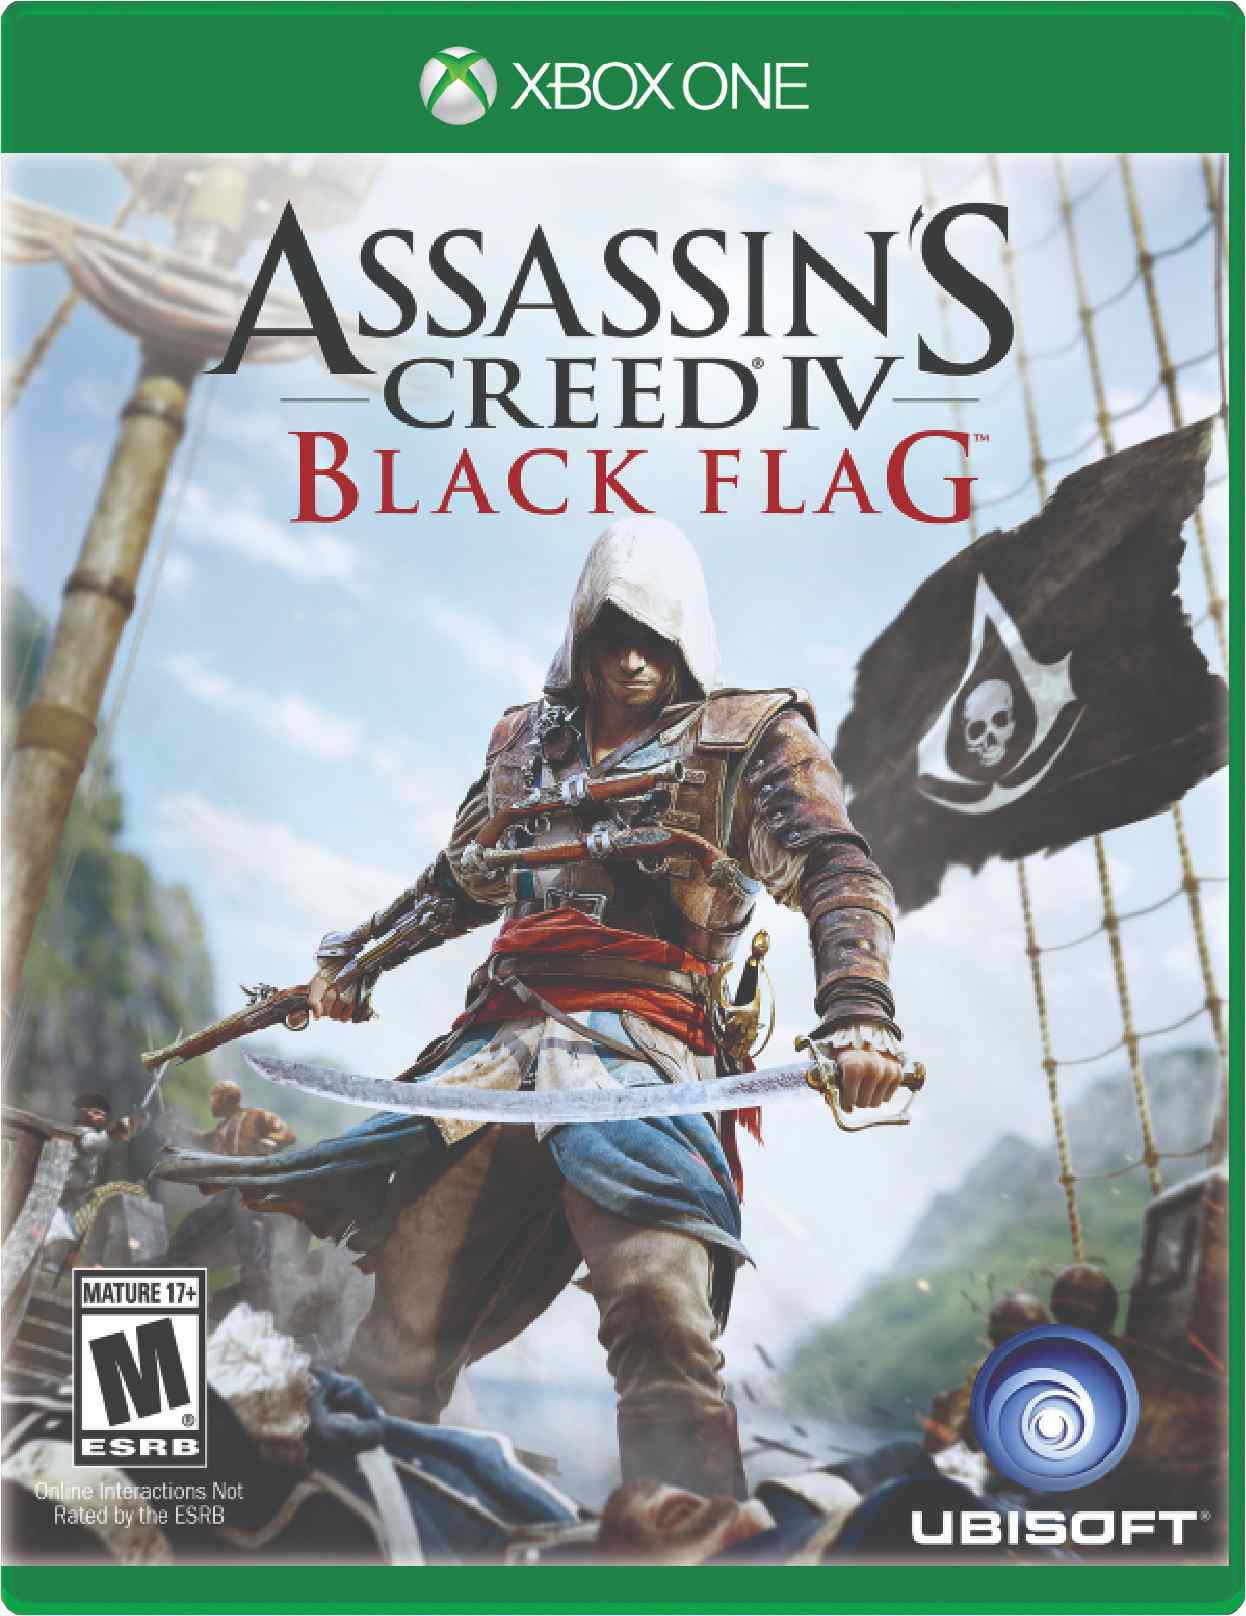 Assassin's Creed IV Black Flag Cover Art